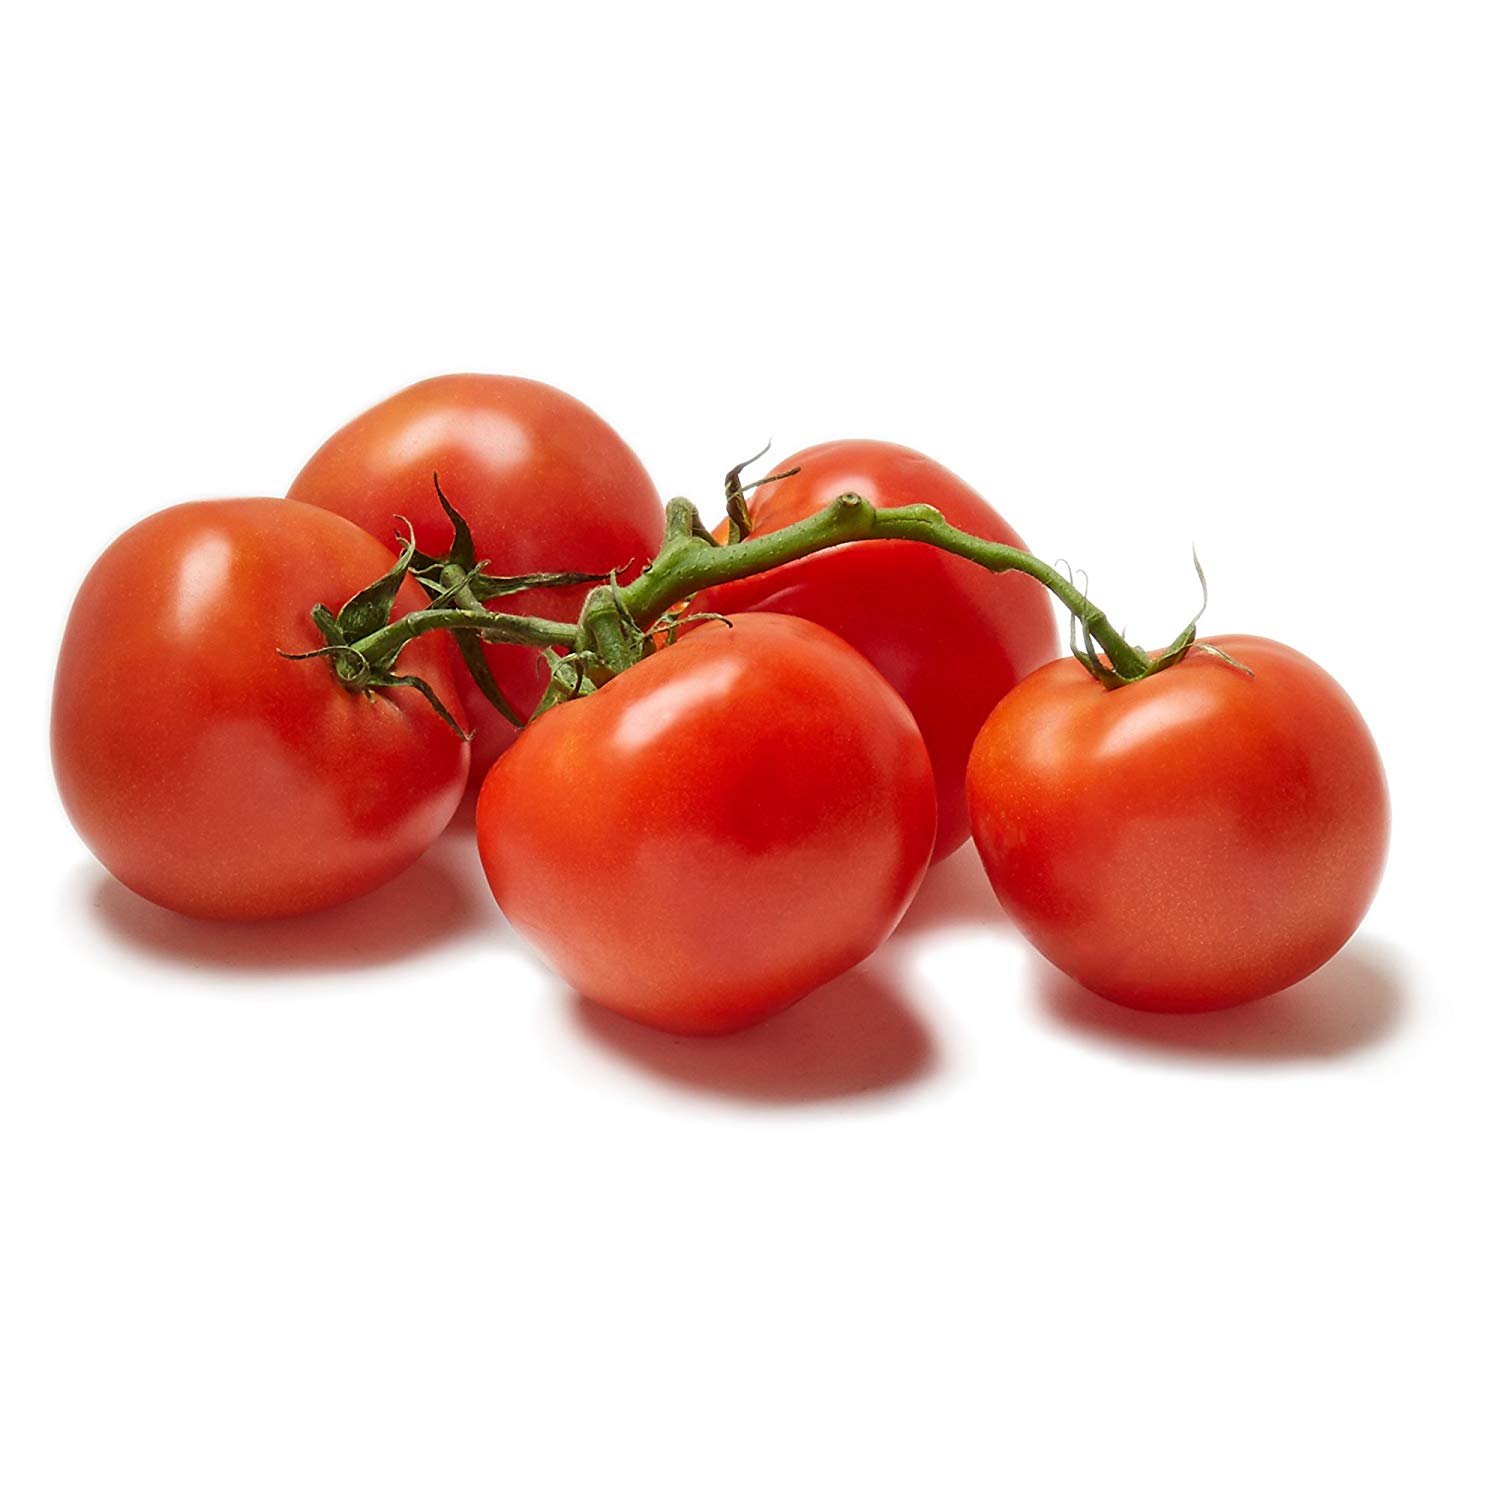 lycoreds-tomato-extract-gets-non-gmo-project-verification